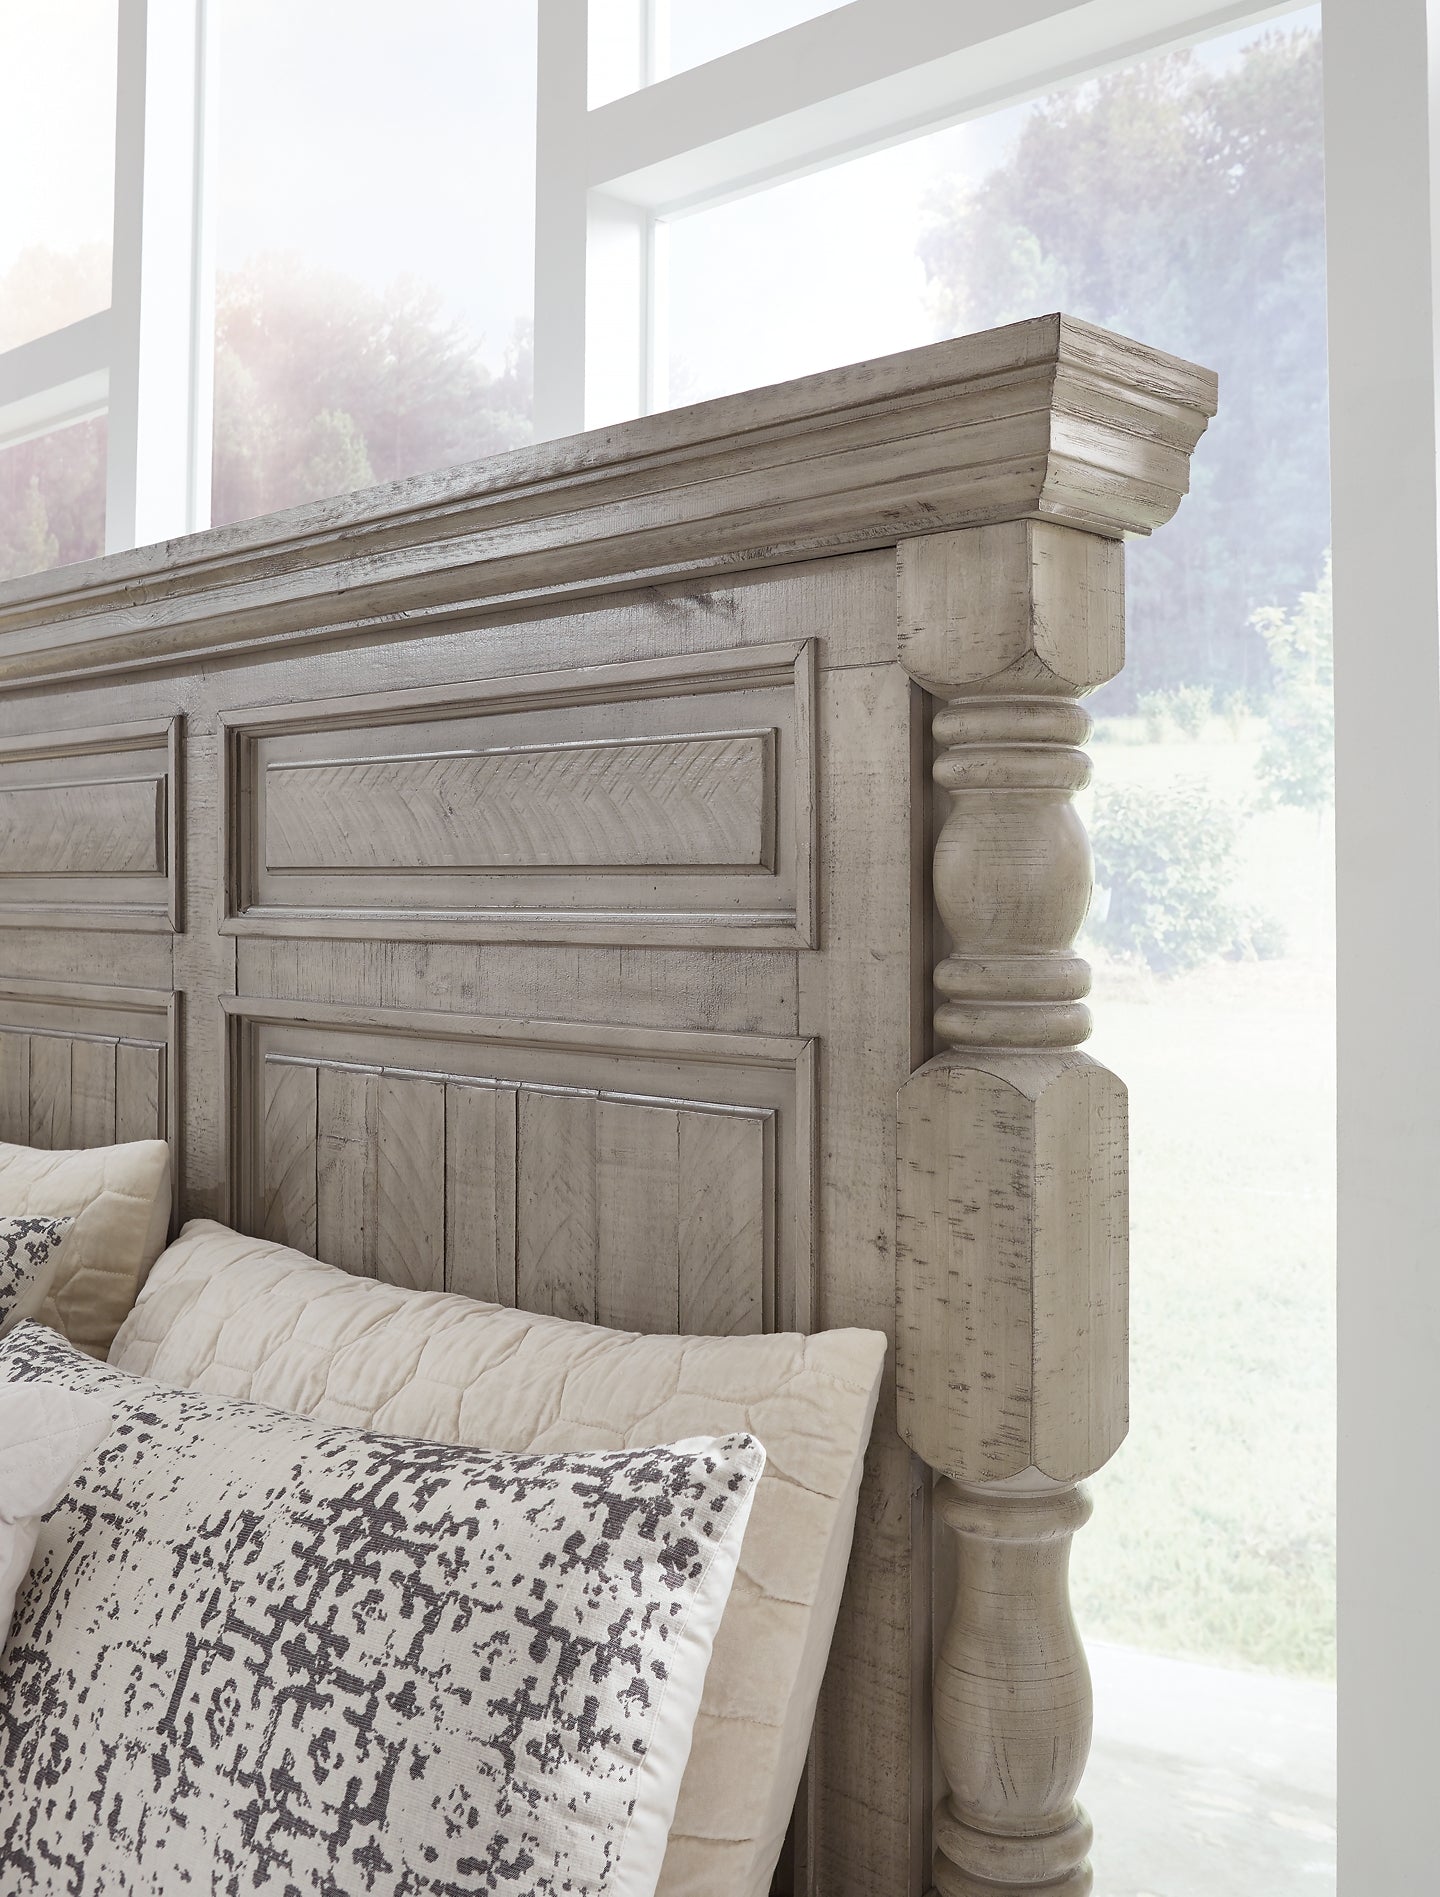 Harrastone King Panel Bed with Dresser